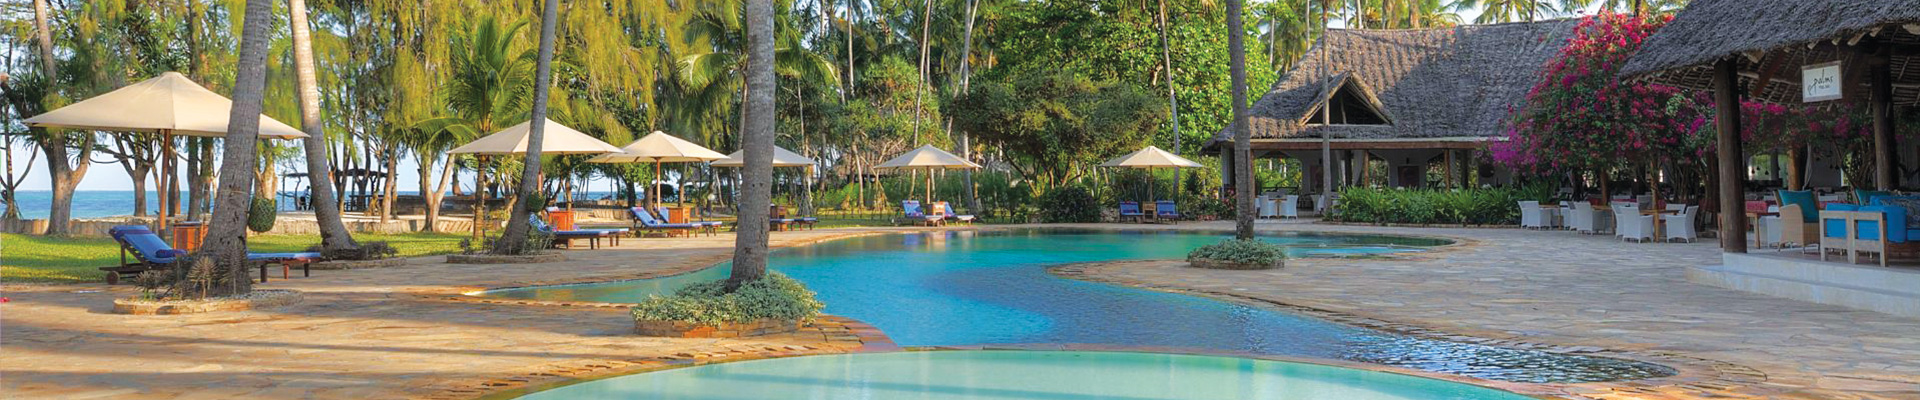 5* Bluebay Beach Resort & Spa - Zanzibar Package on FlySafair  (7 Nights)